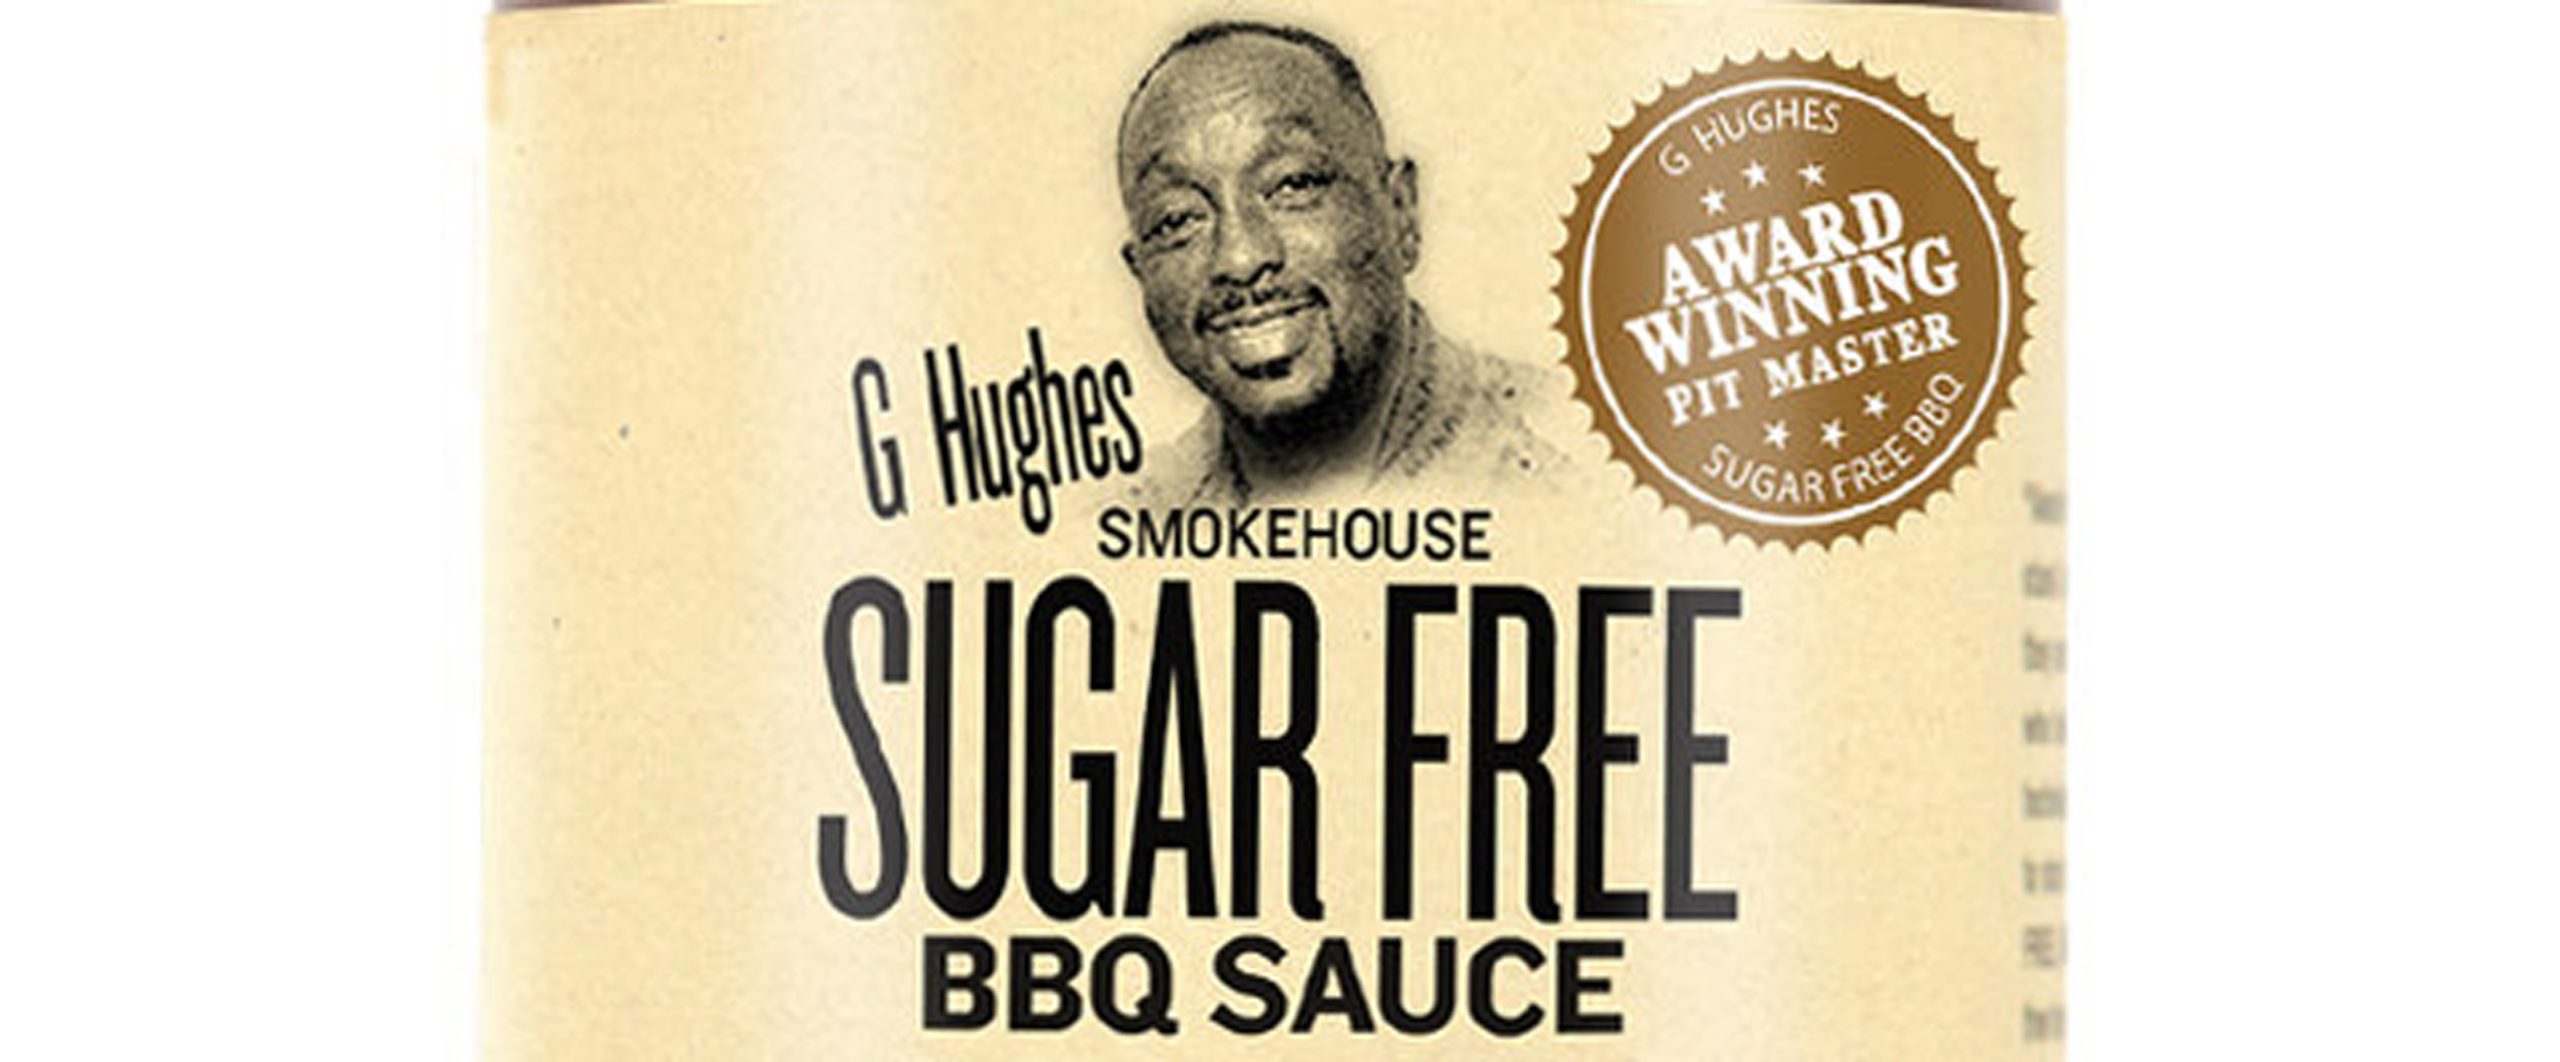 G Hughes BBQ Sauce - Sugar Free, Low Carb